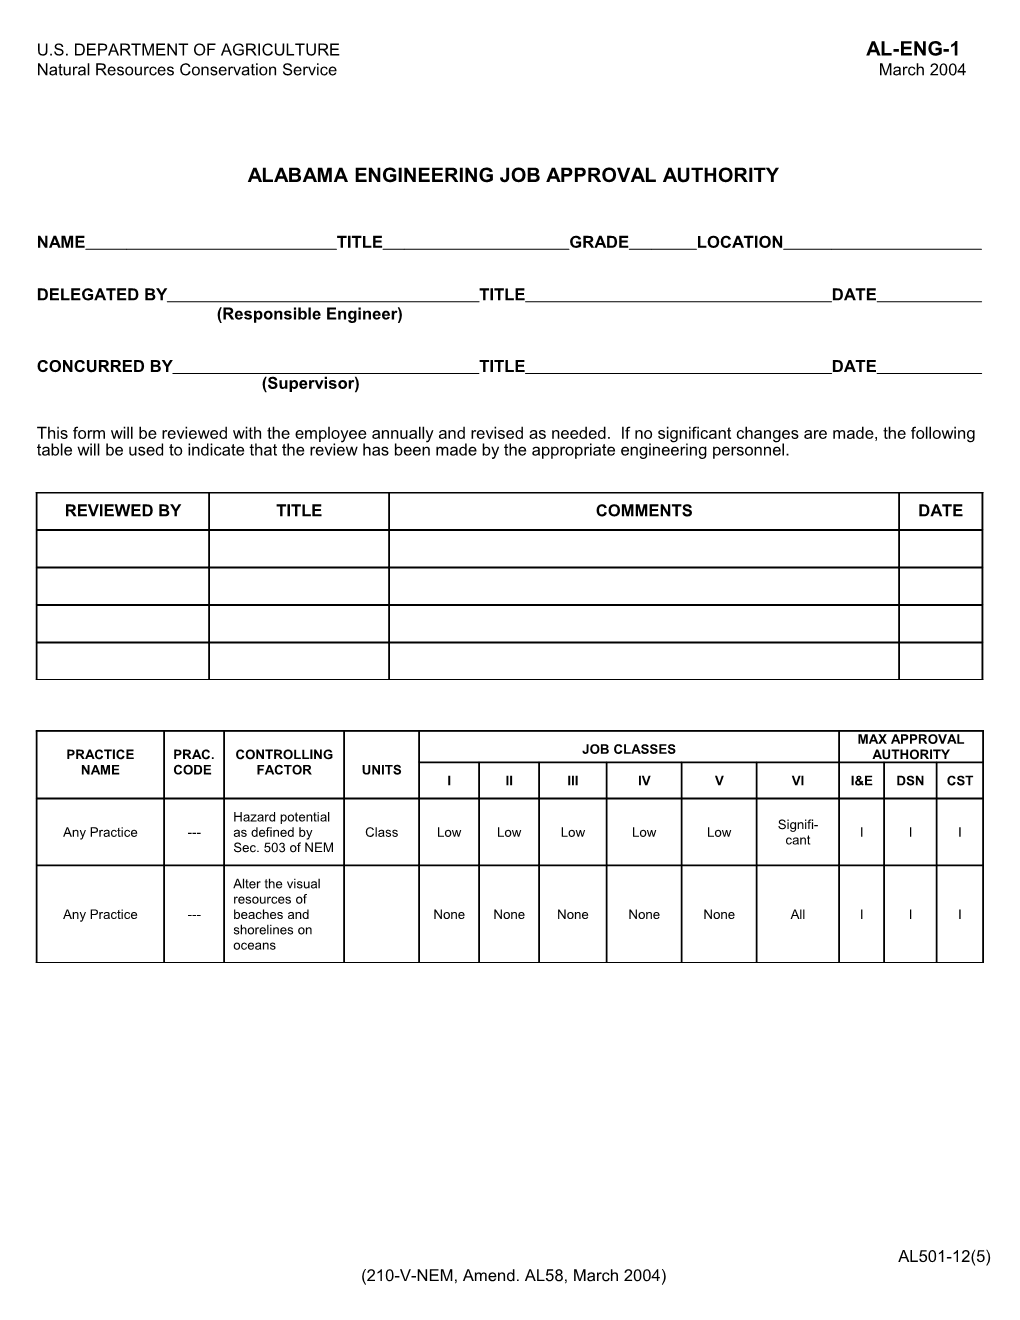 Alabama Engineering Job Approval Authority